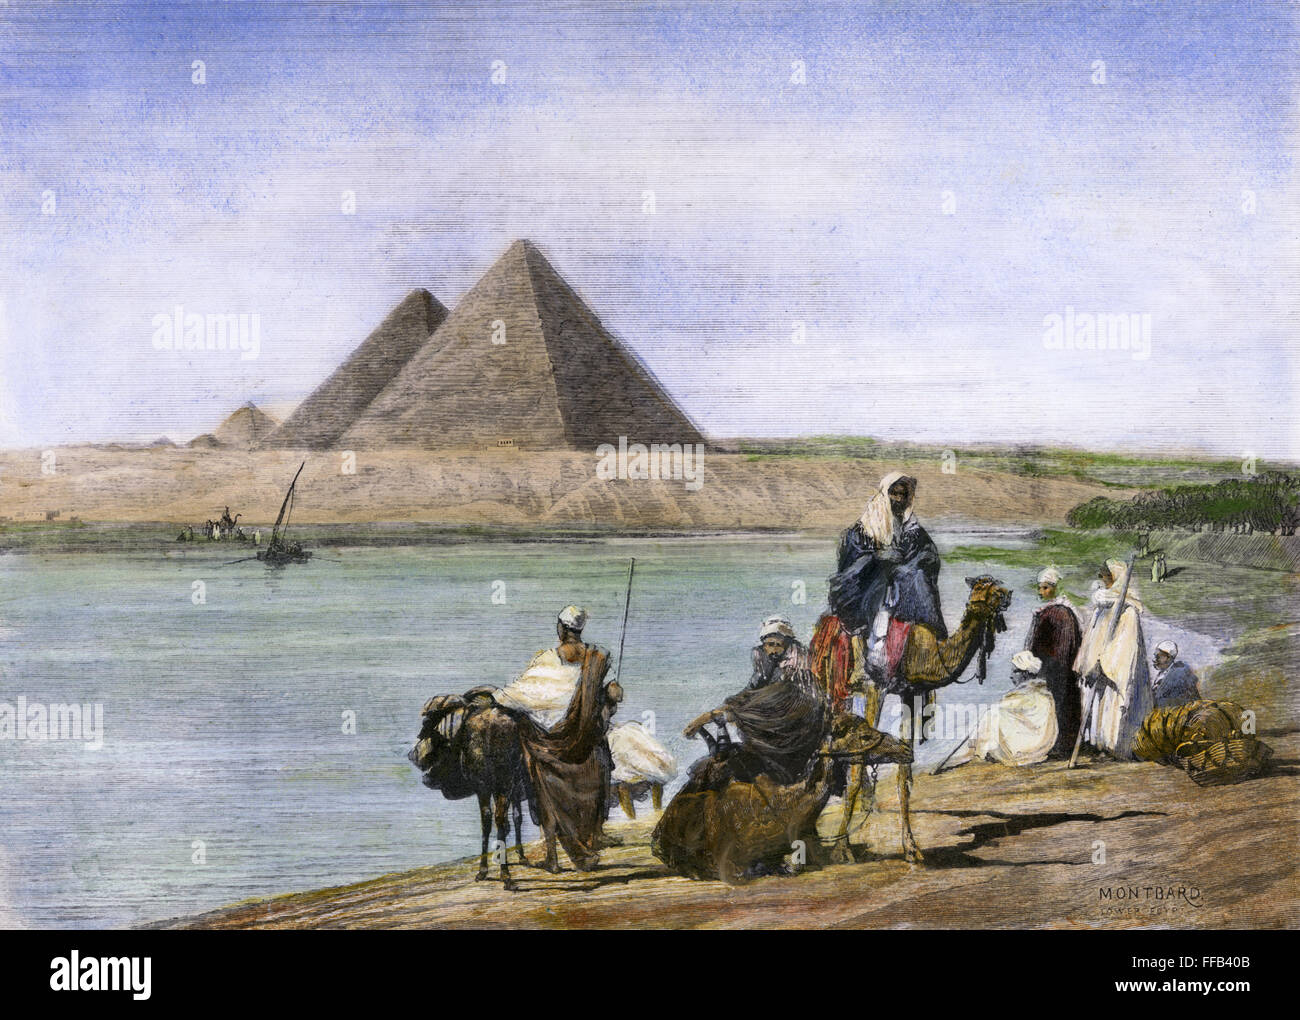 PYRAMIDS AT GIZA, 1882. /nThe pyramids at Giza, Egypt, during an inundation of the Nile River. Wood engraving, English, 1882. Stock Photo